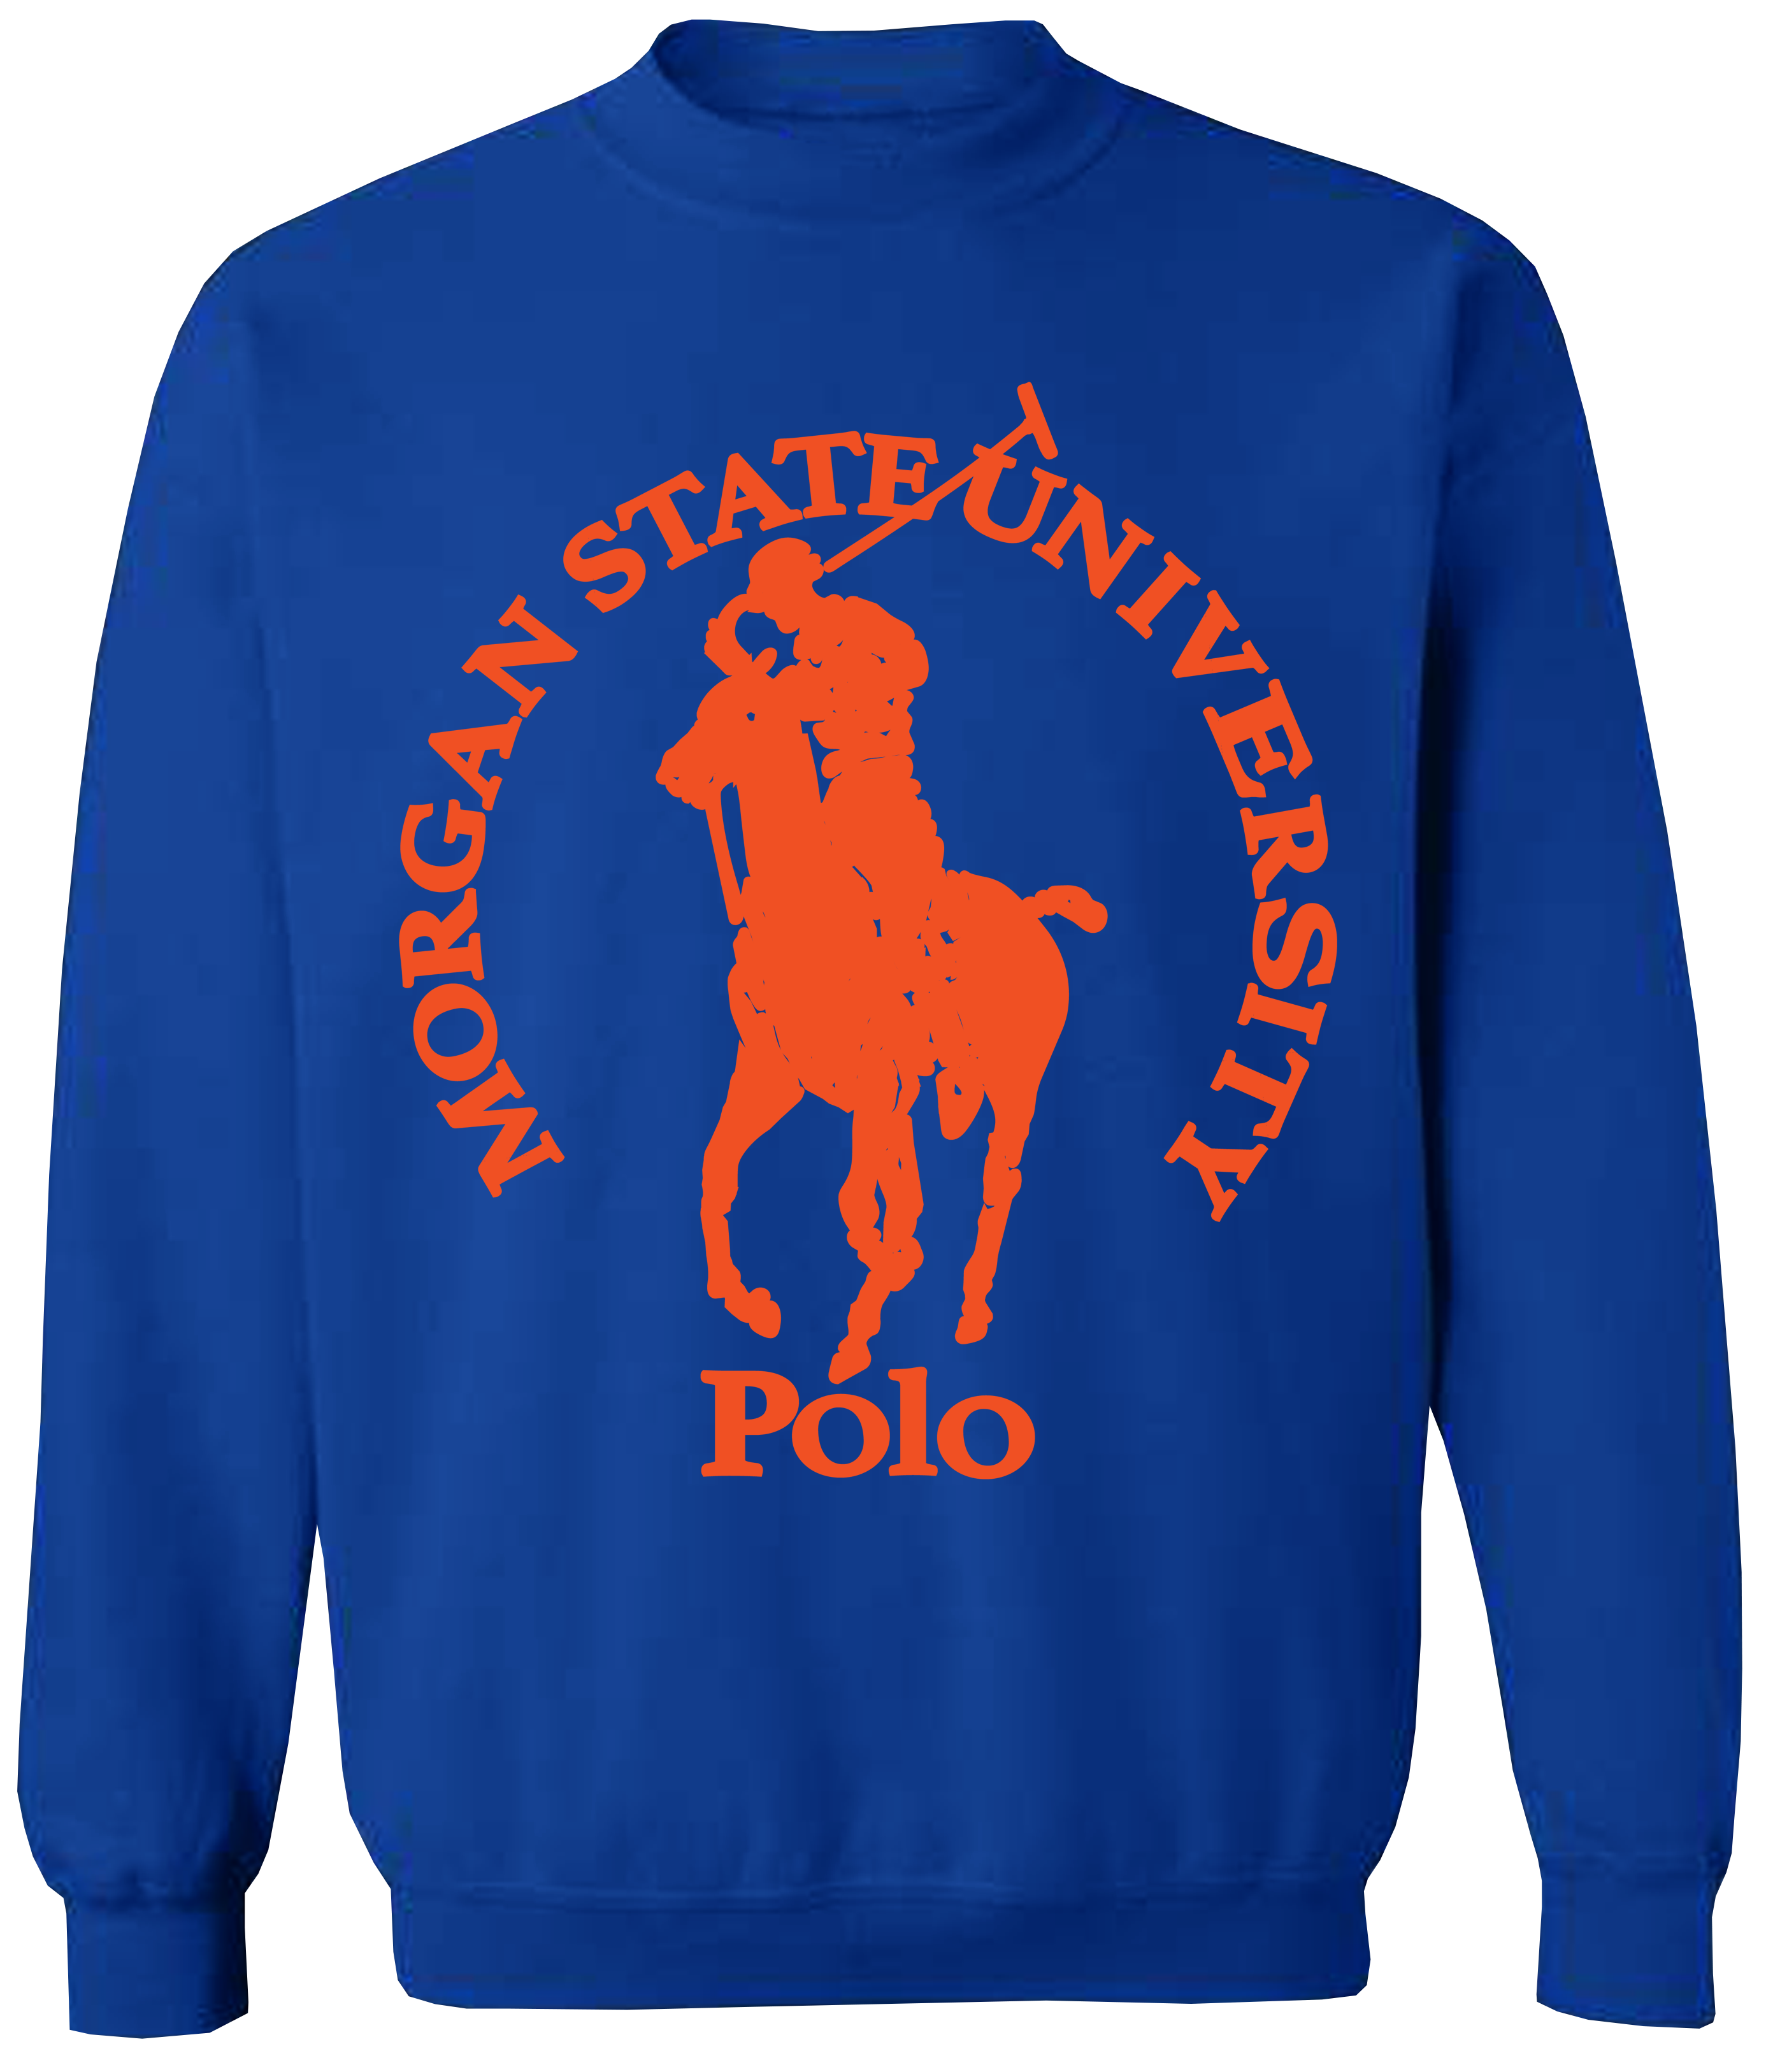 HBCU Polo Crewneck Sweatshirt - Morgan State